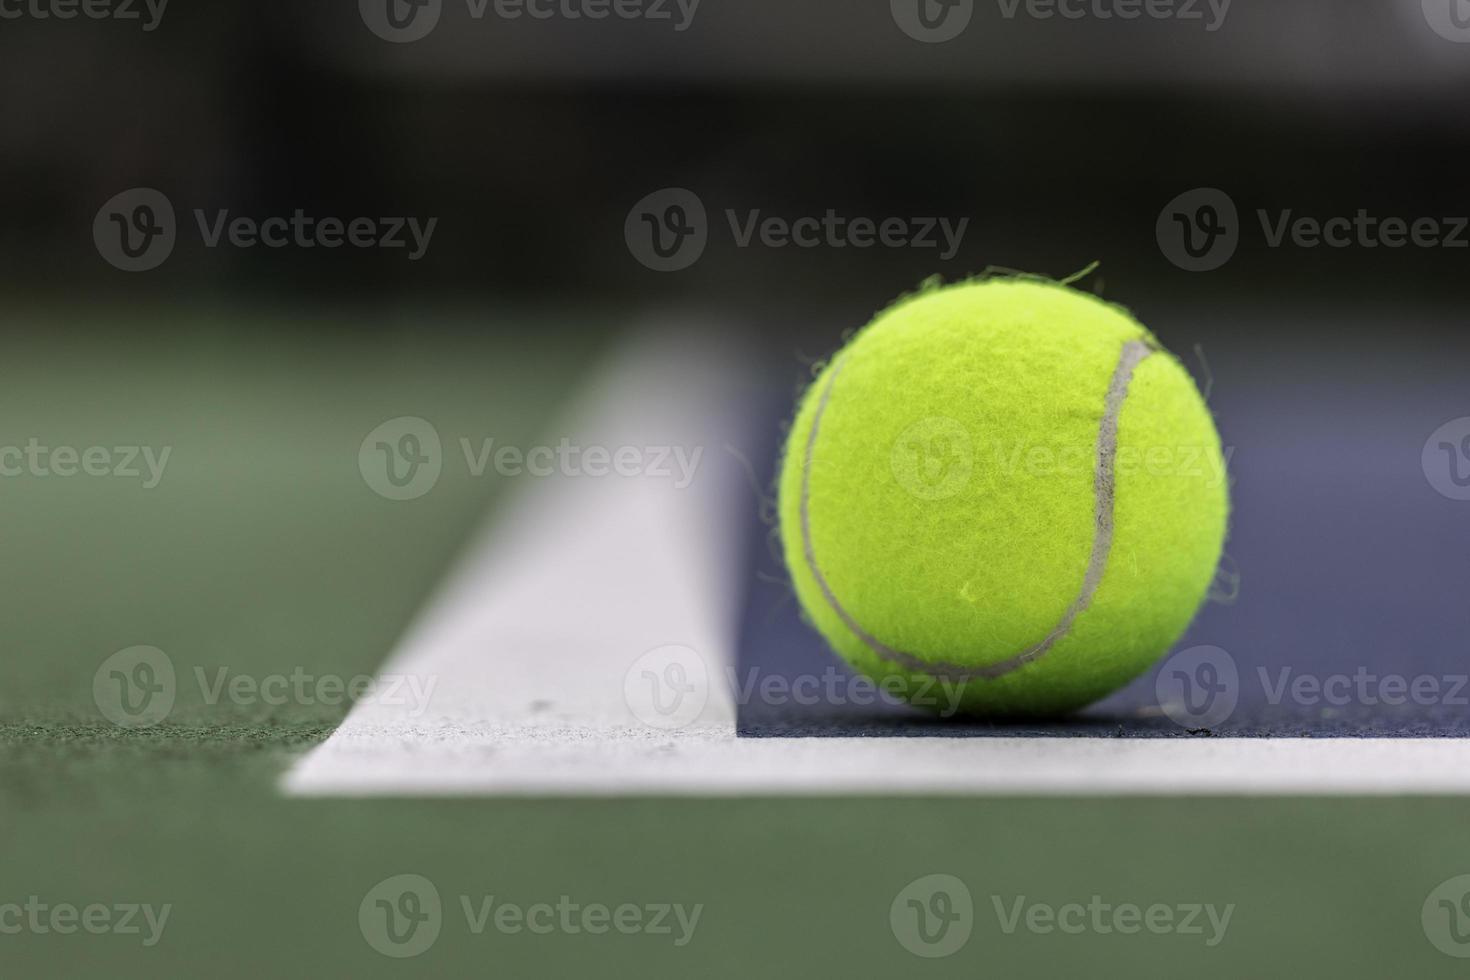 Tennisball auf dem Platz foto